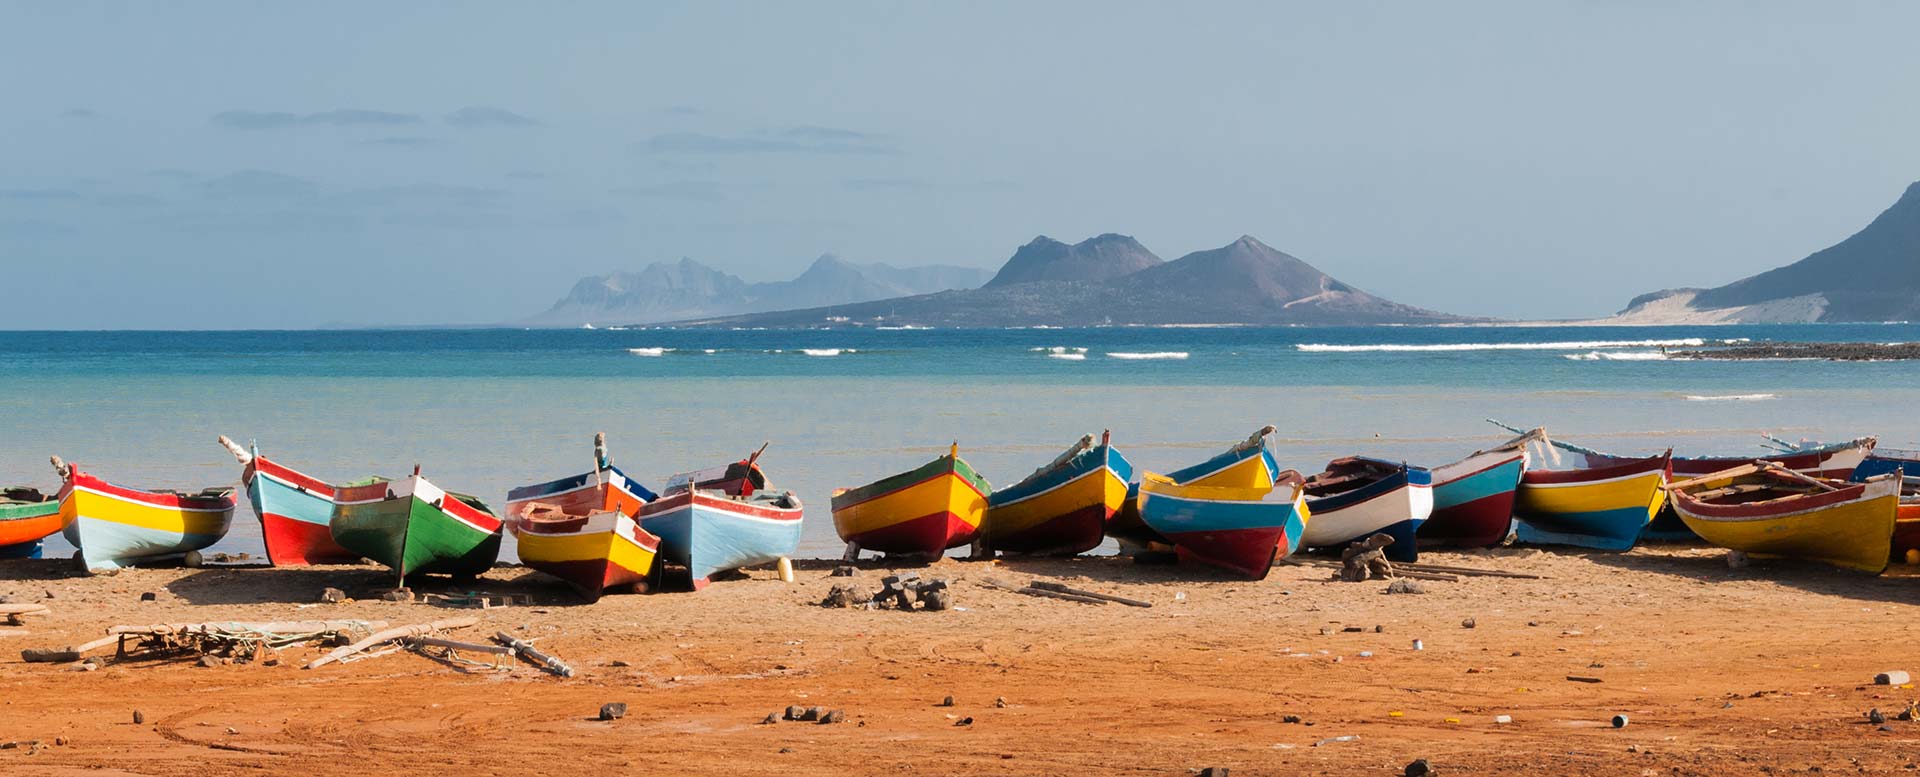 Flitterwochen-Ziel Kap Verde